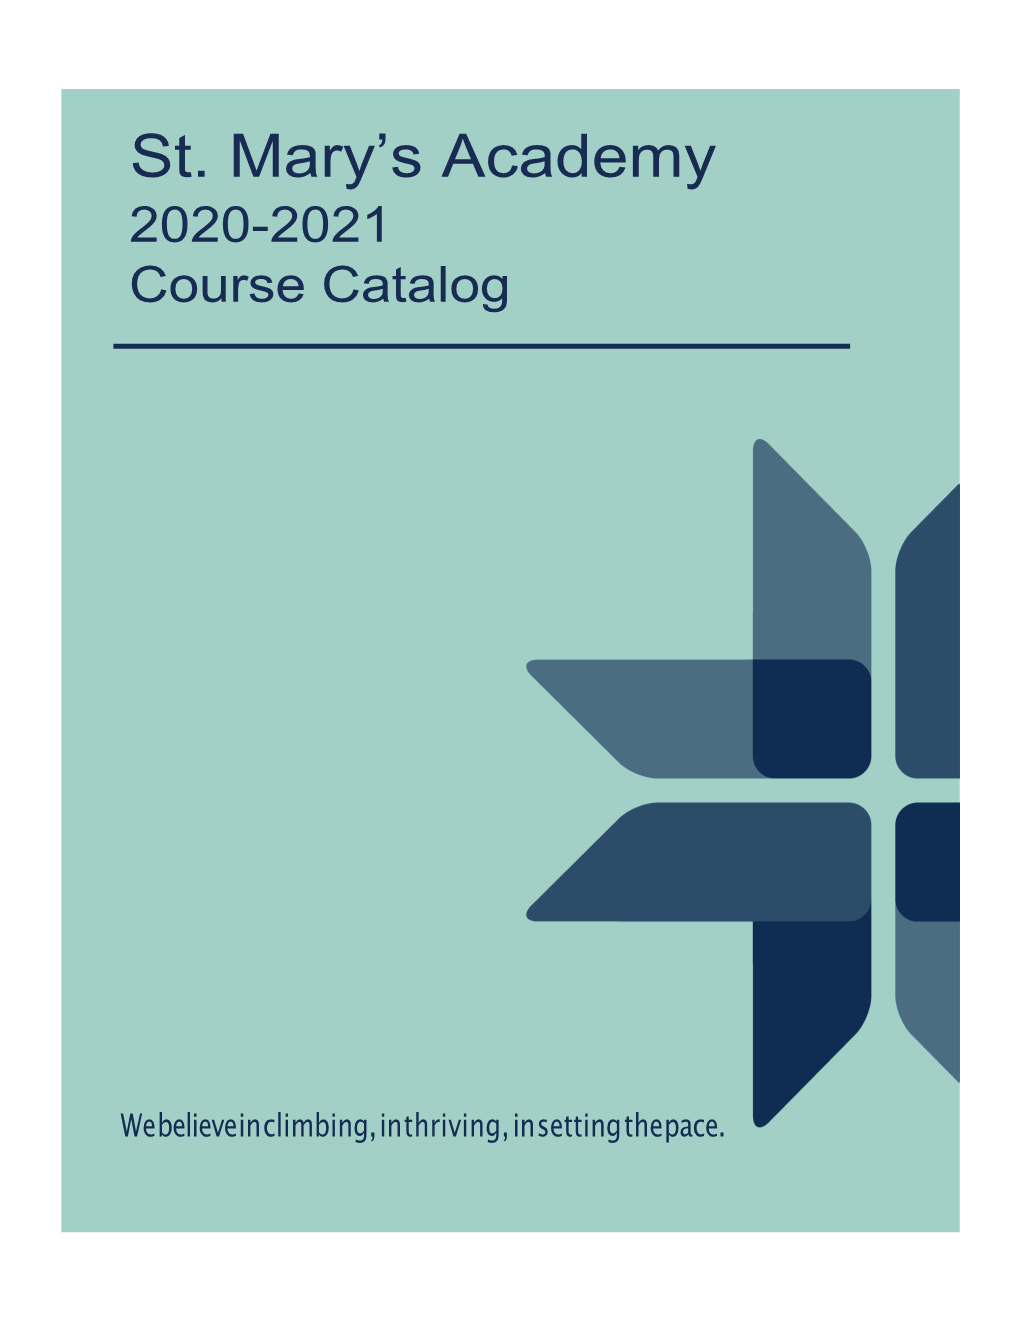 2020-2021 Course Catalog